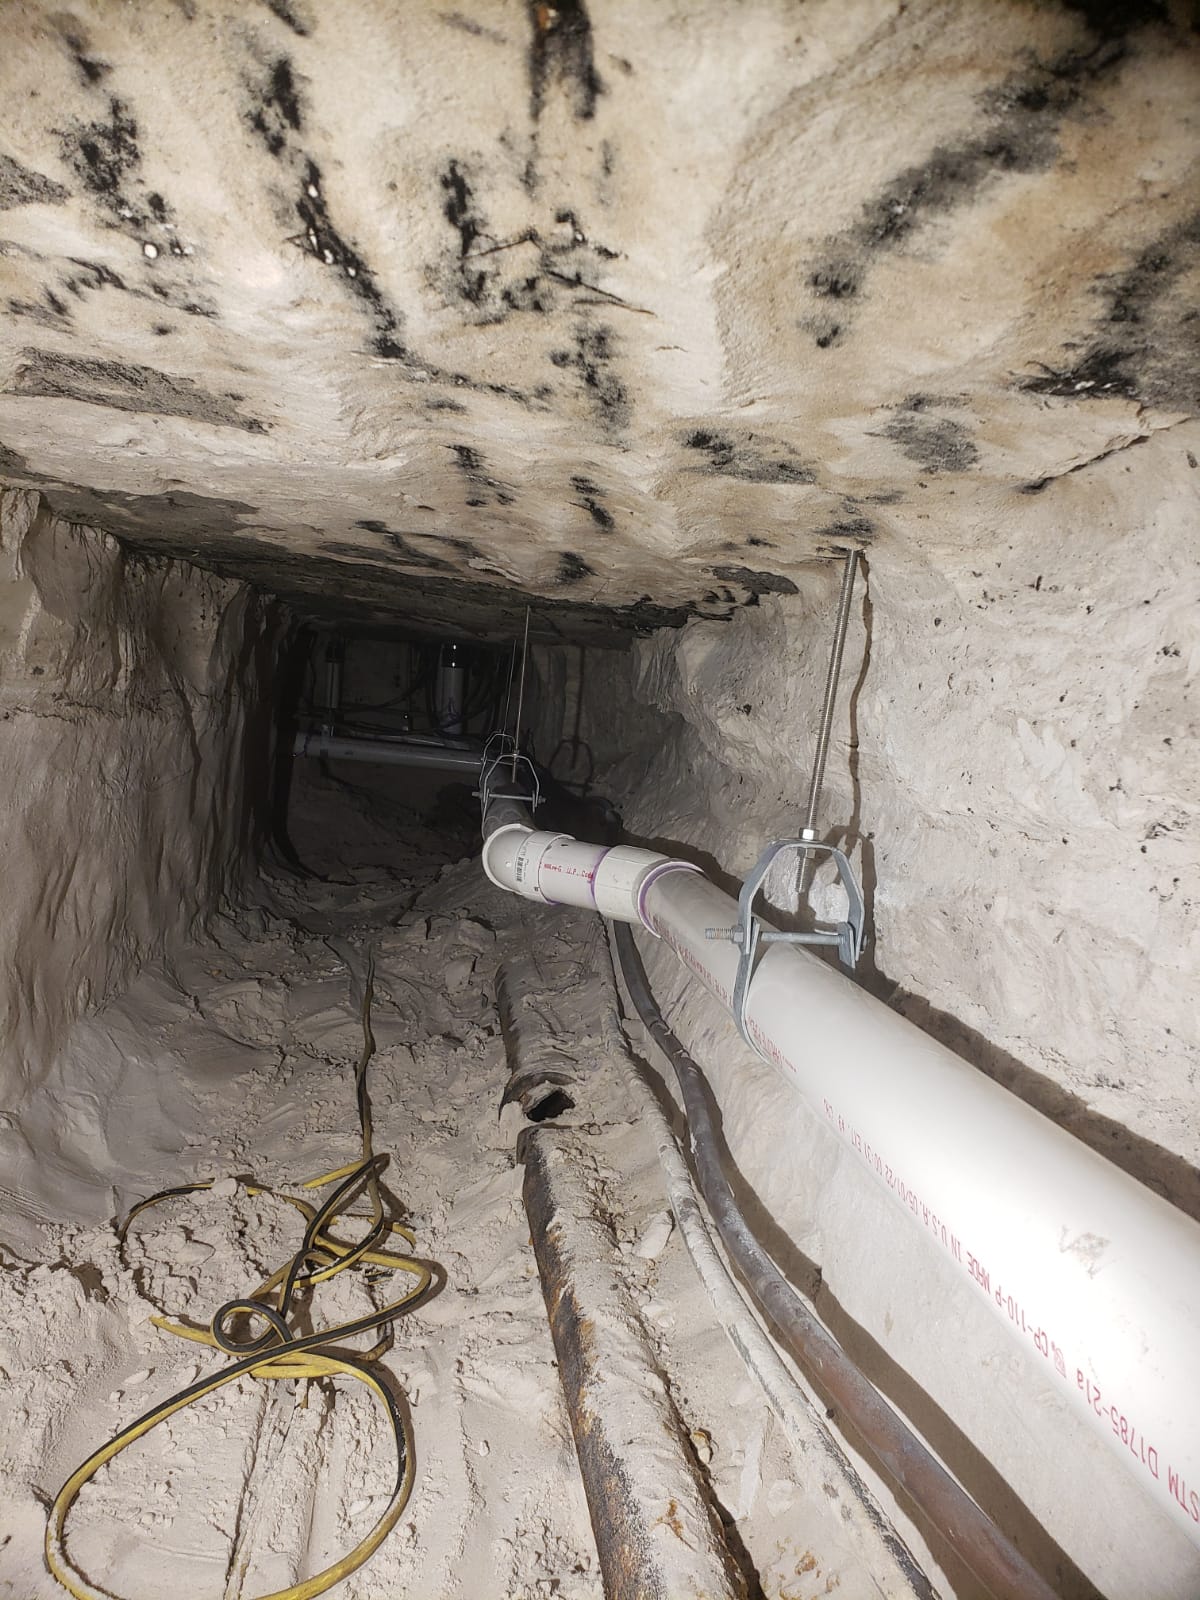 PVC Sewer Line Installation in Miami - Latest Jobs -  Miami 305 Plumbing